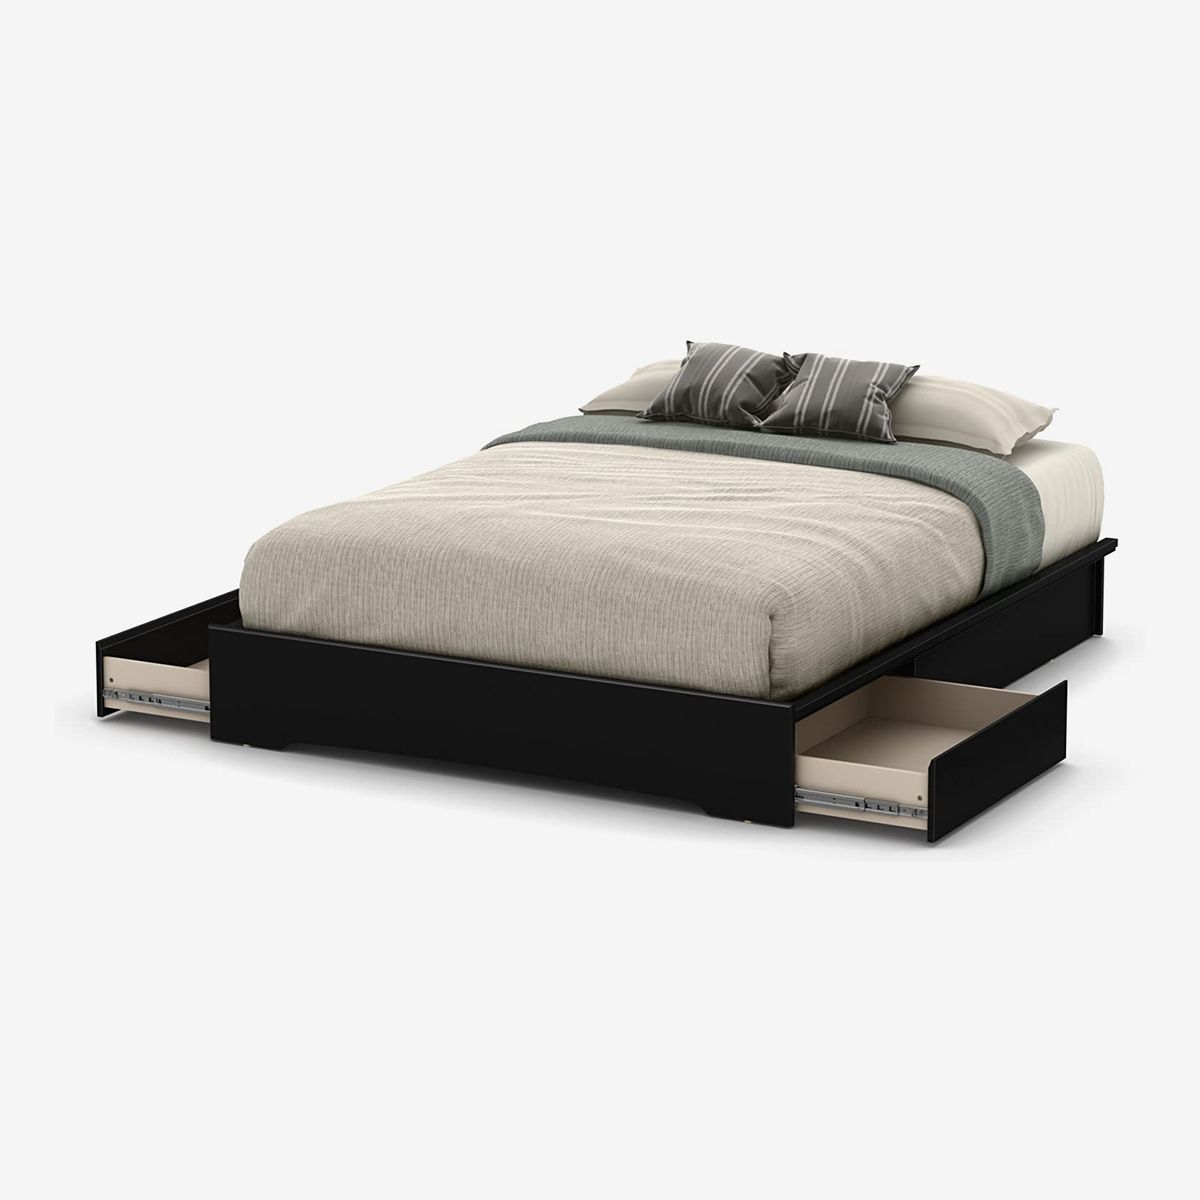 Modern Platform Beds With Storage, Full Bed Frame With Storage Underneath